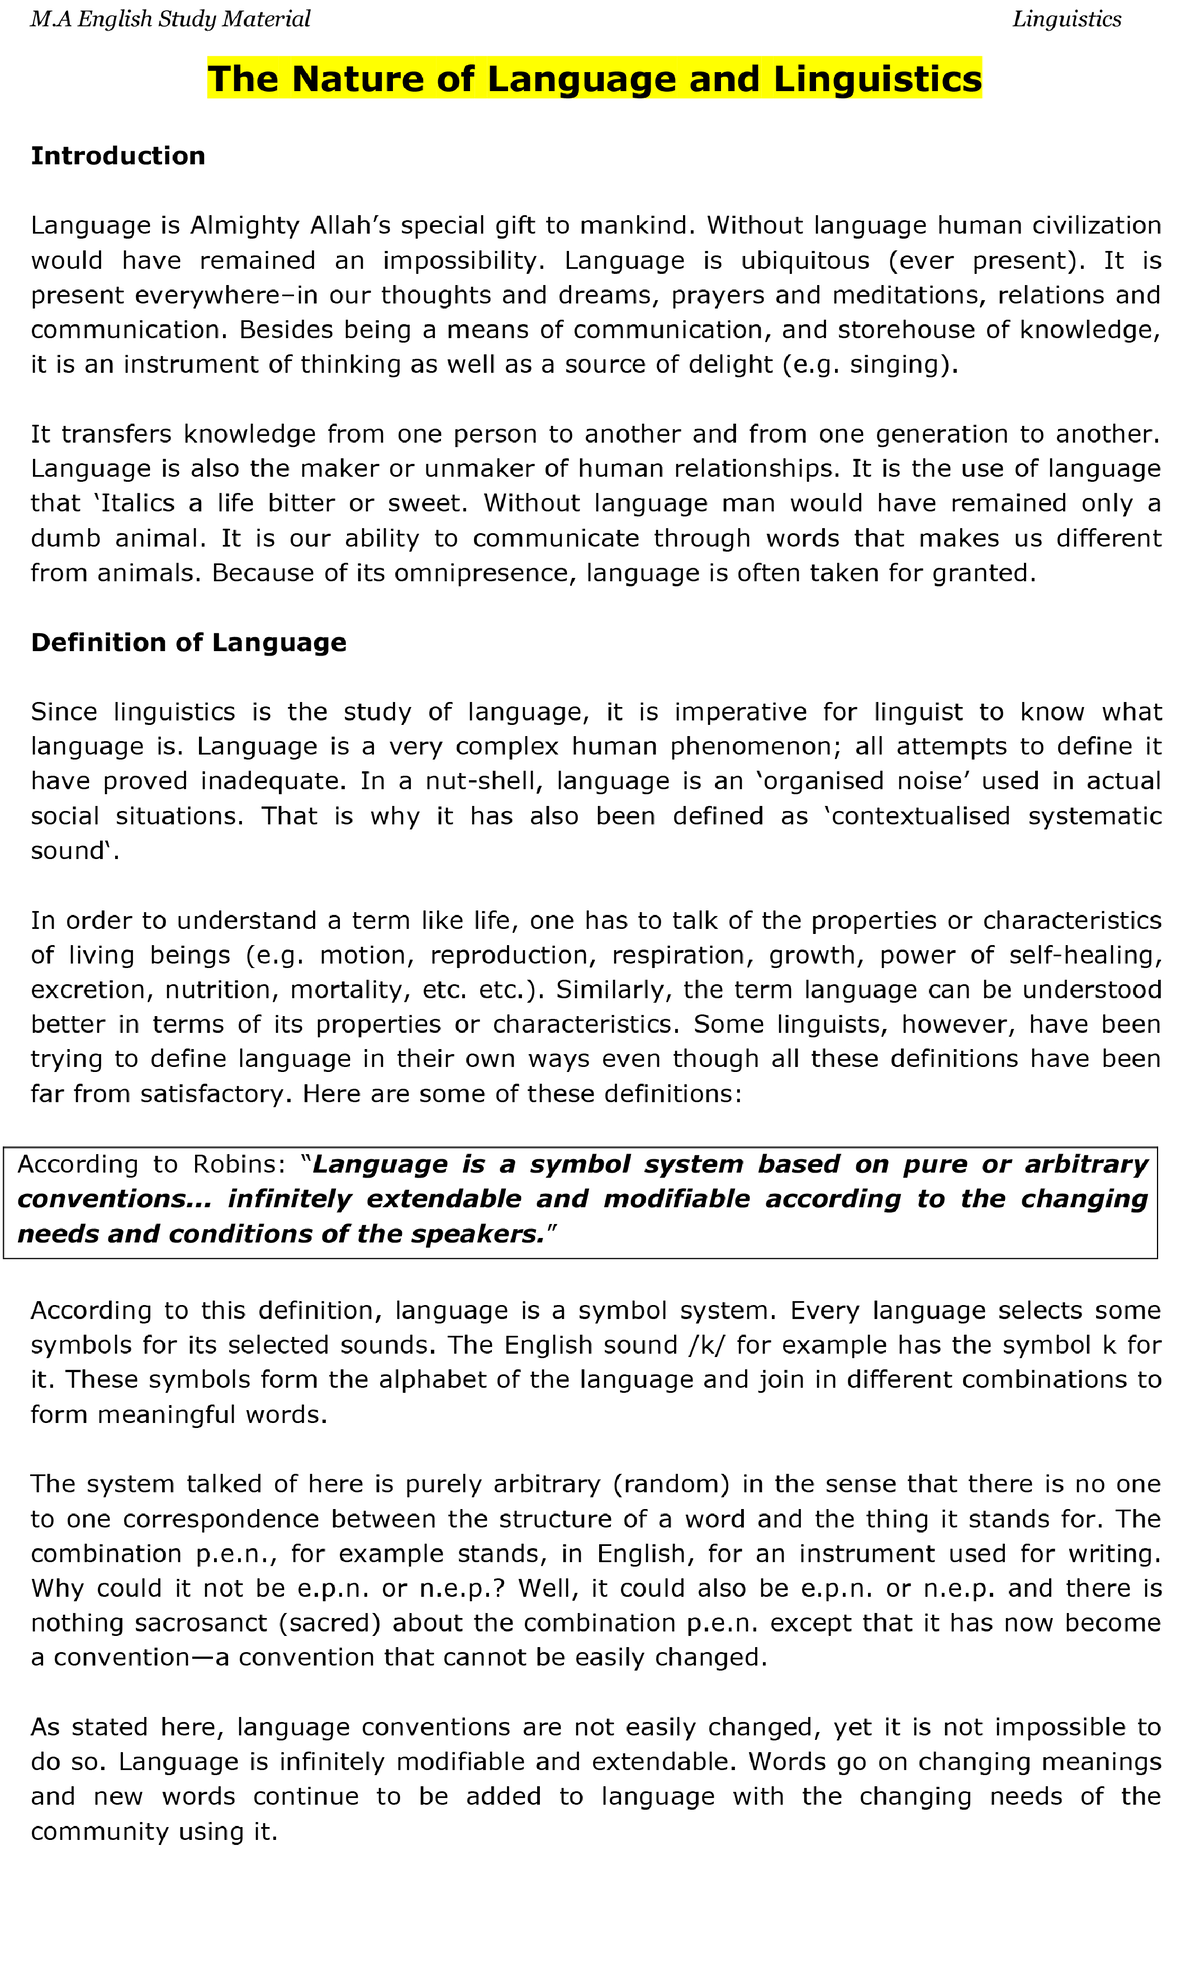 ma english literature dissertation pdf